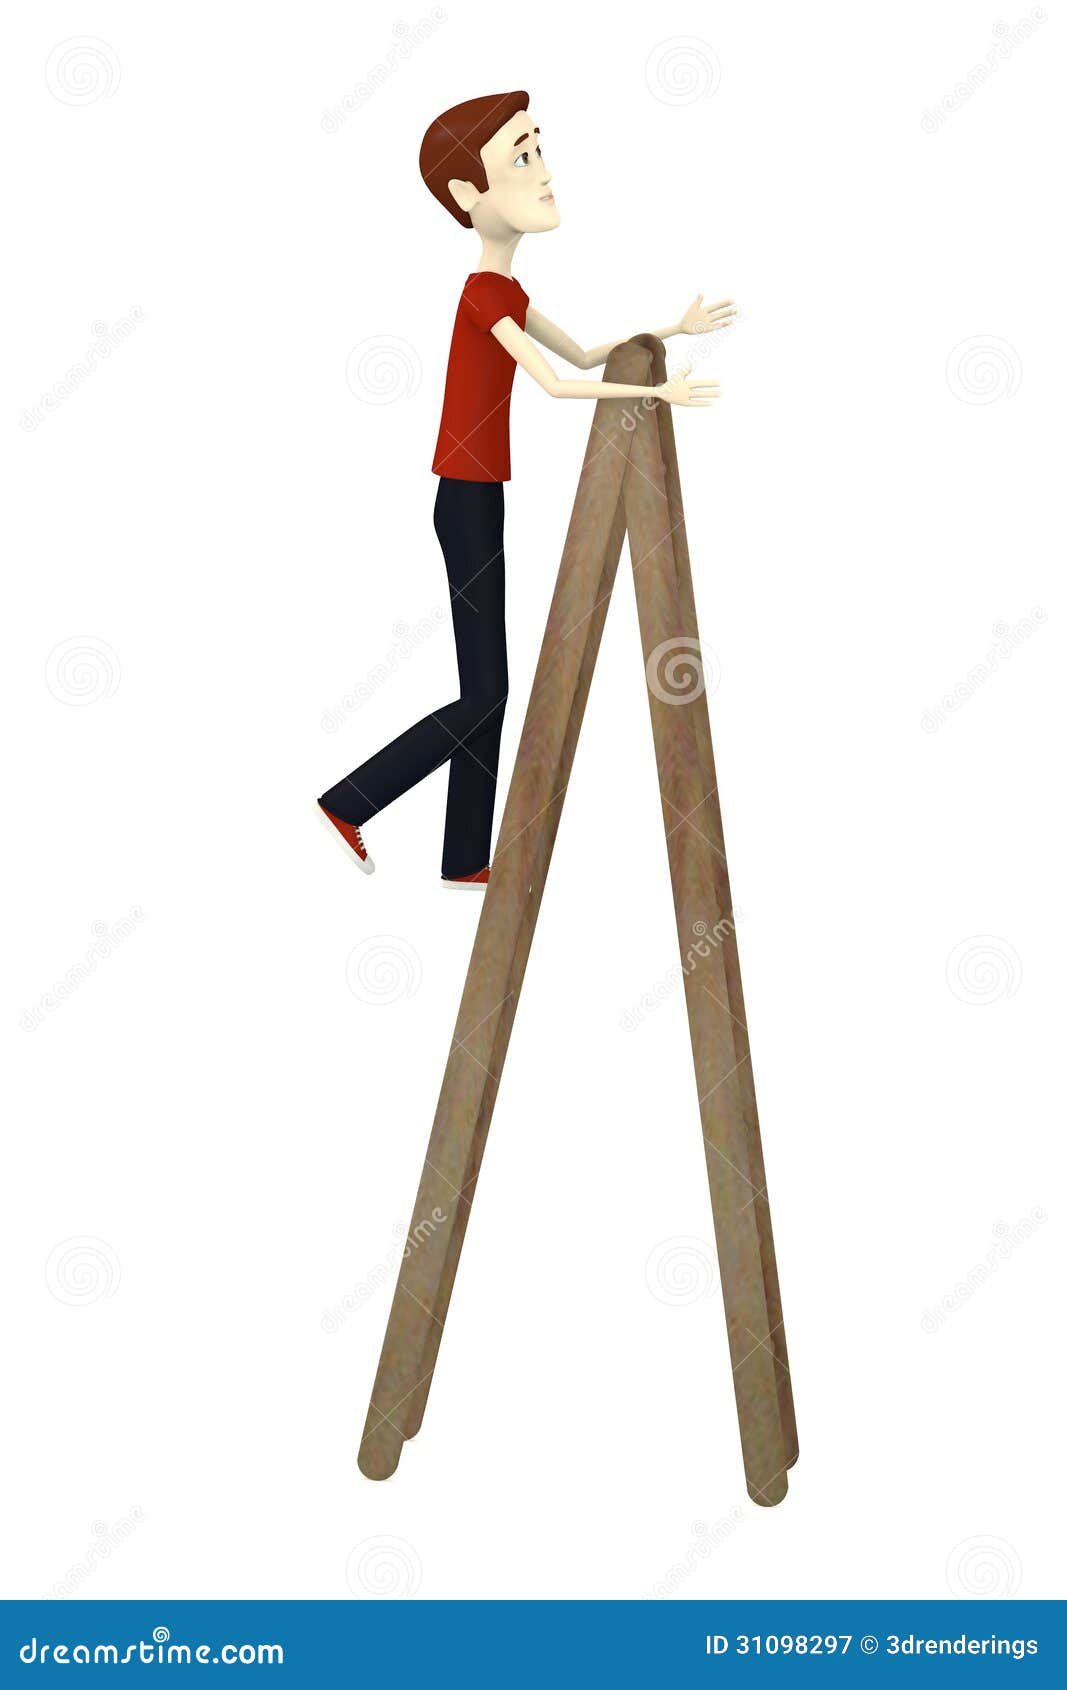 clipart man on ladder - photo #16